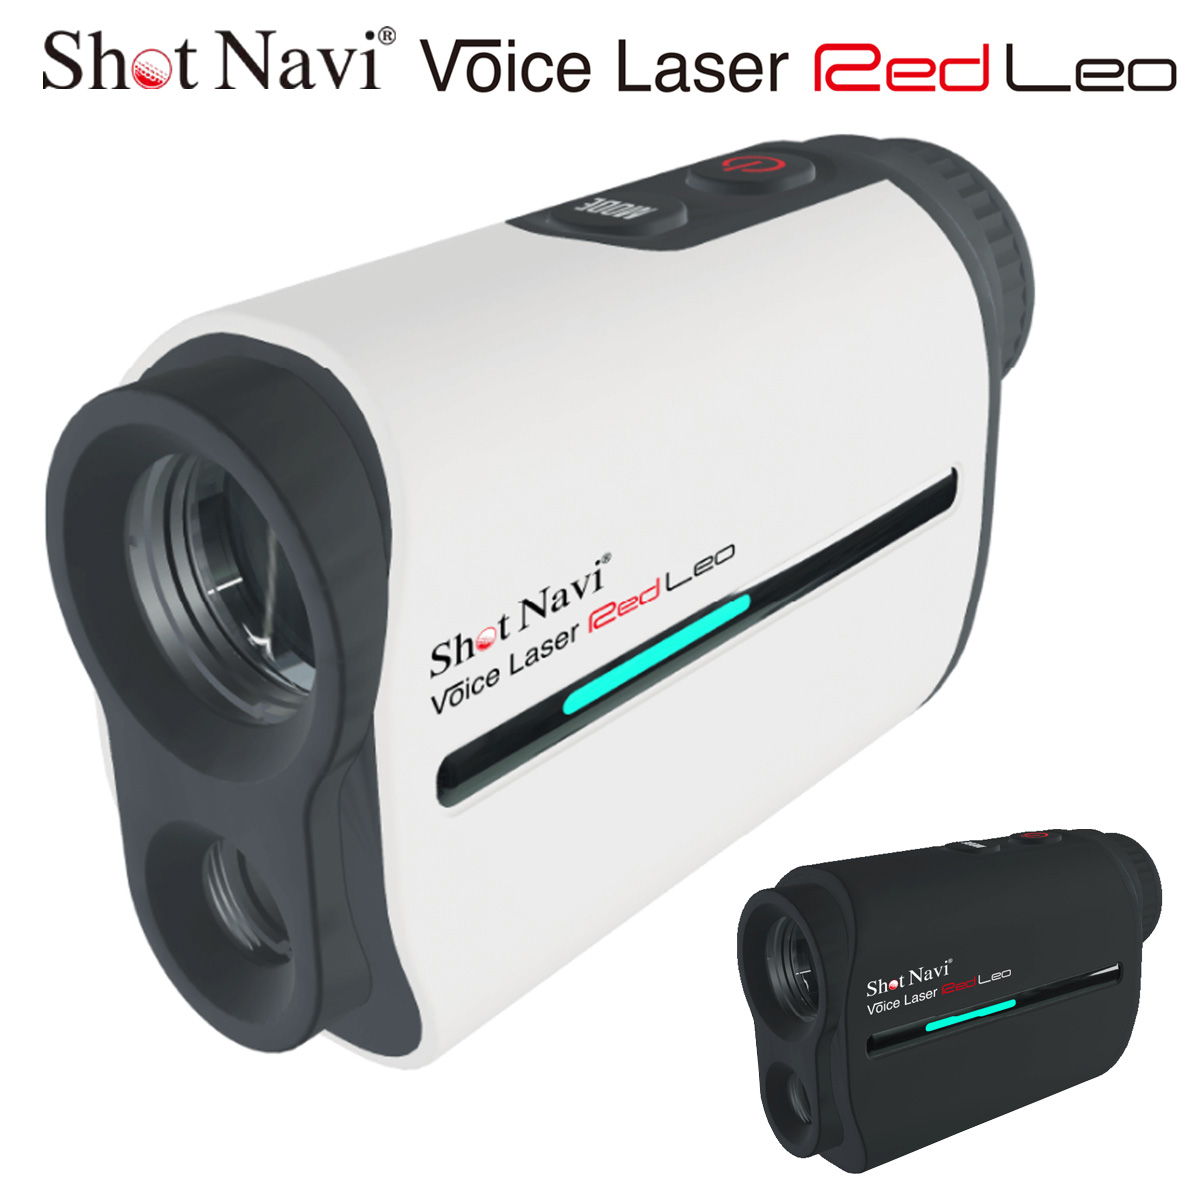 ShotNavi(ショットナビ)日本正規品 Voice Laser Red Leo (ボイスレーザーレッドレオ) 2022新製品  「ゴルフ用レーザー距離計」 あす楽対応 : ＥＺＡＫＩ ＮＥＴ ＧＯＬＦ